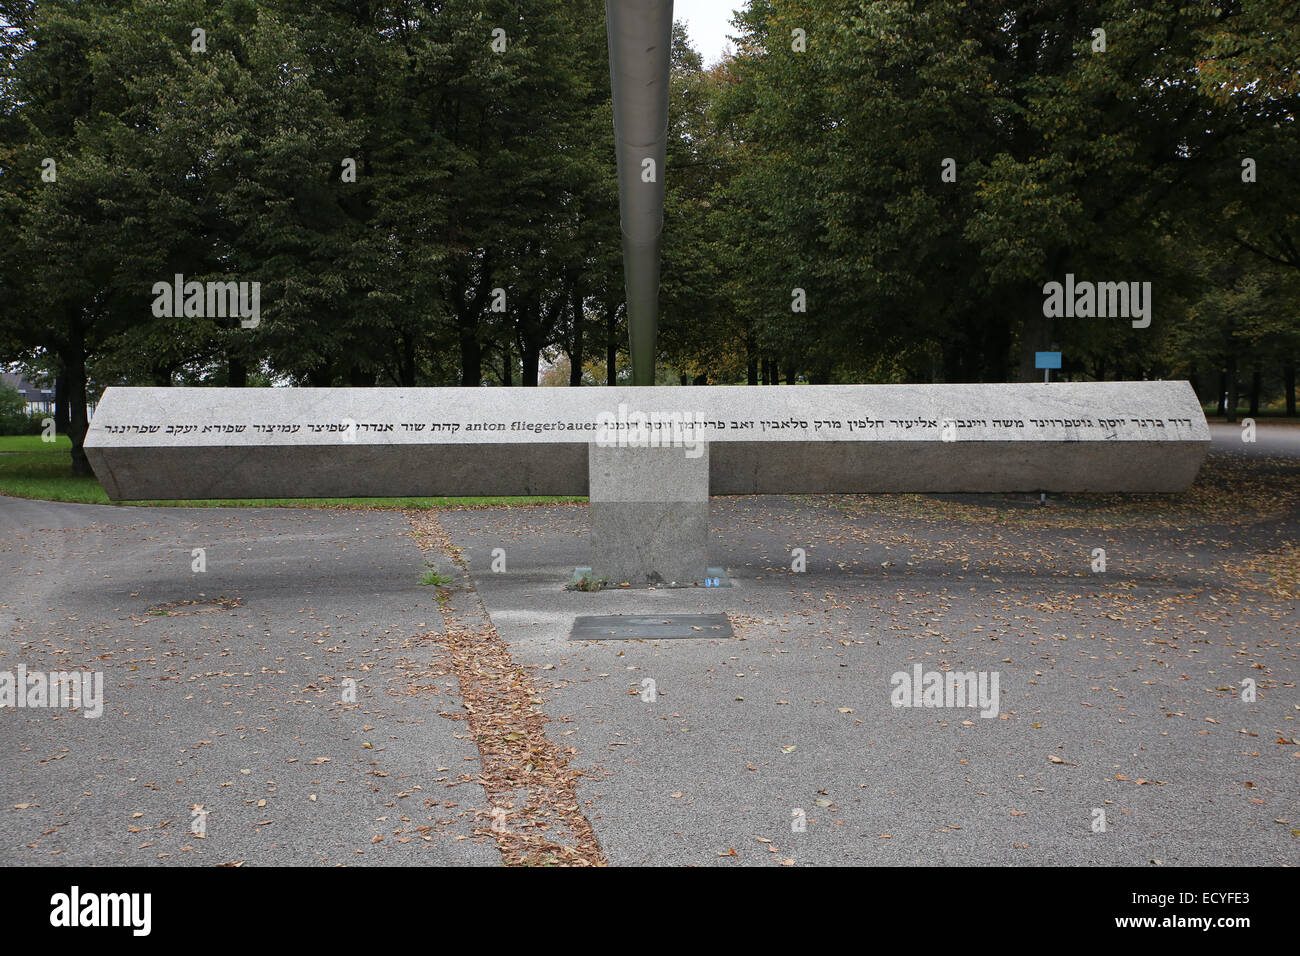 Munich massacre memorial 1972 olympics Stock Photo